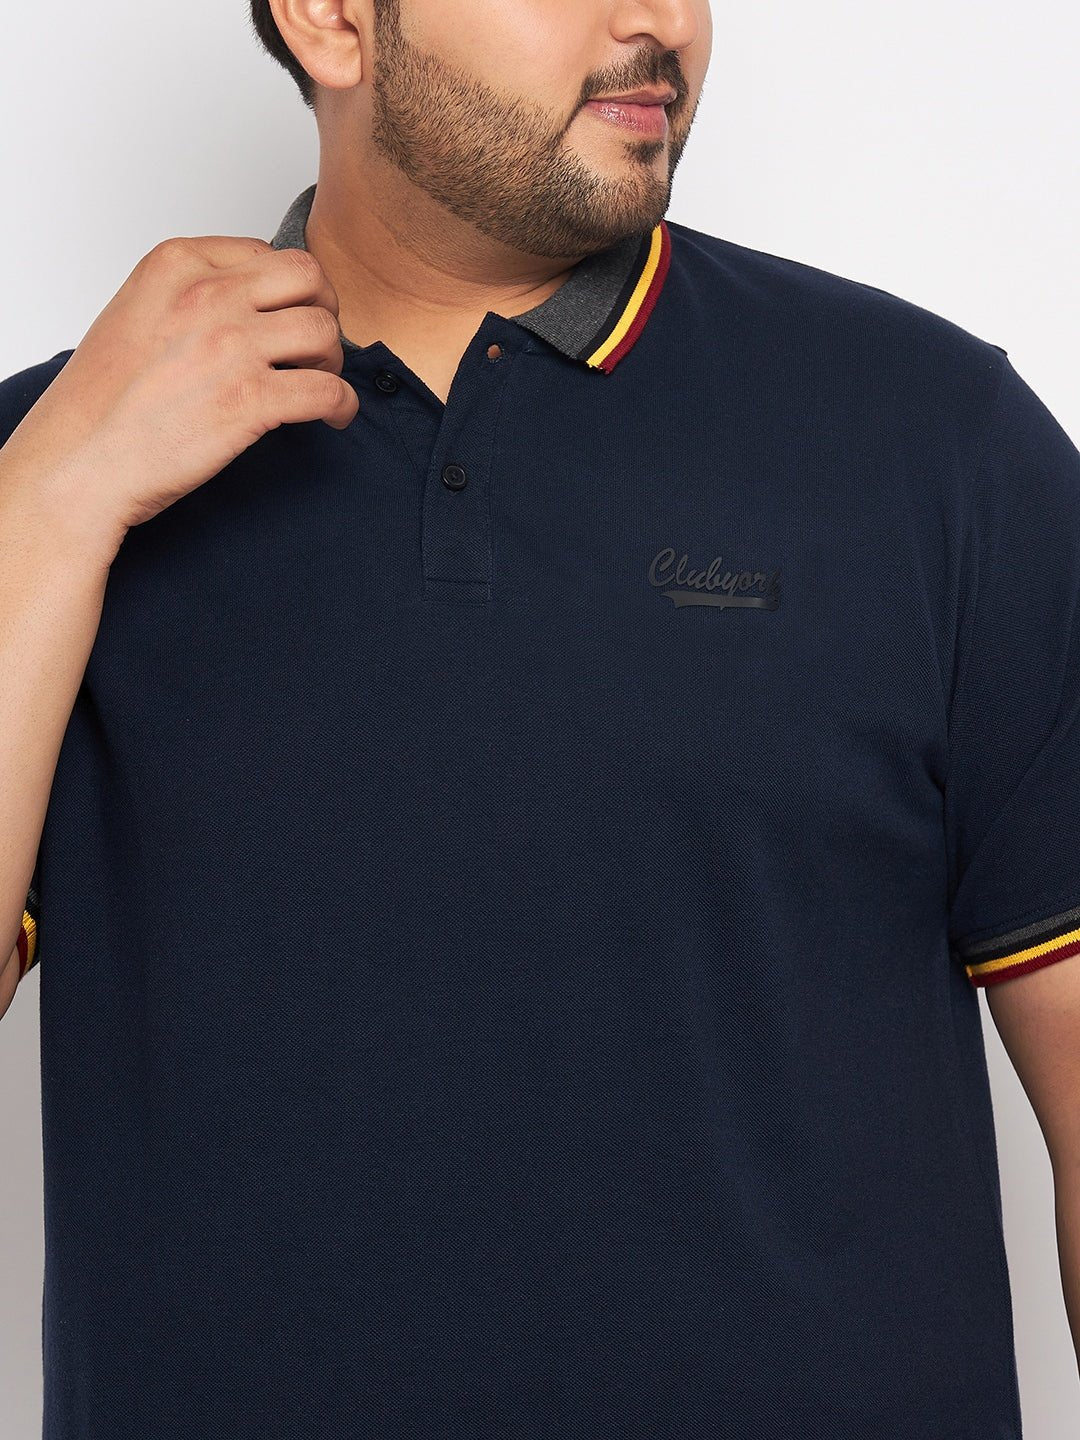 Plus Size Navy Blue Polo T-Shirt - clubyork